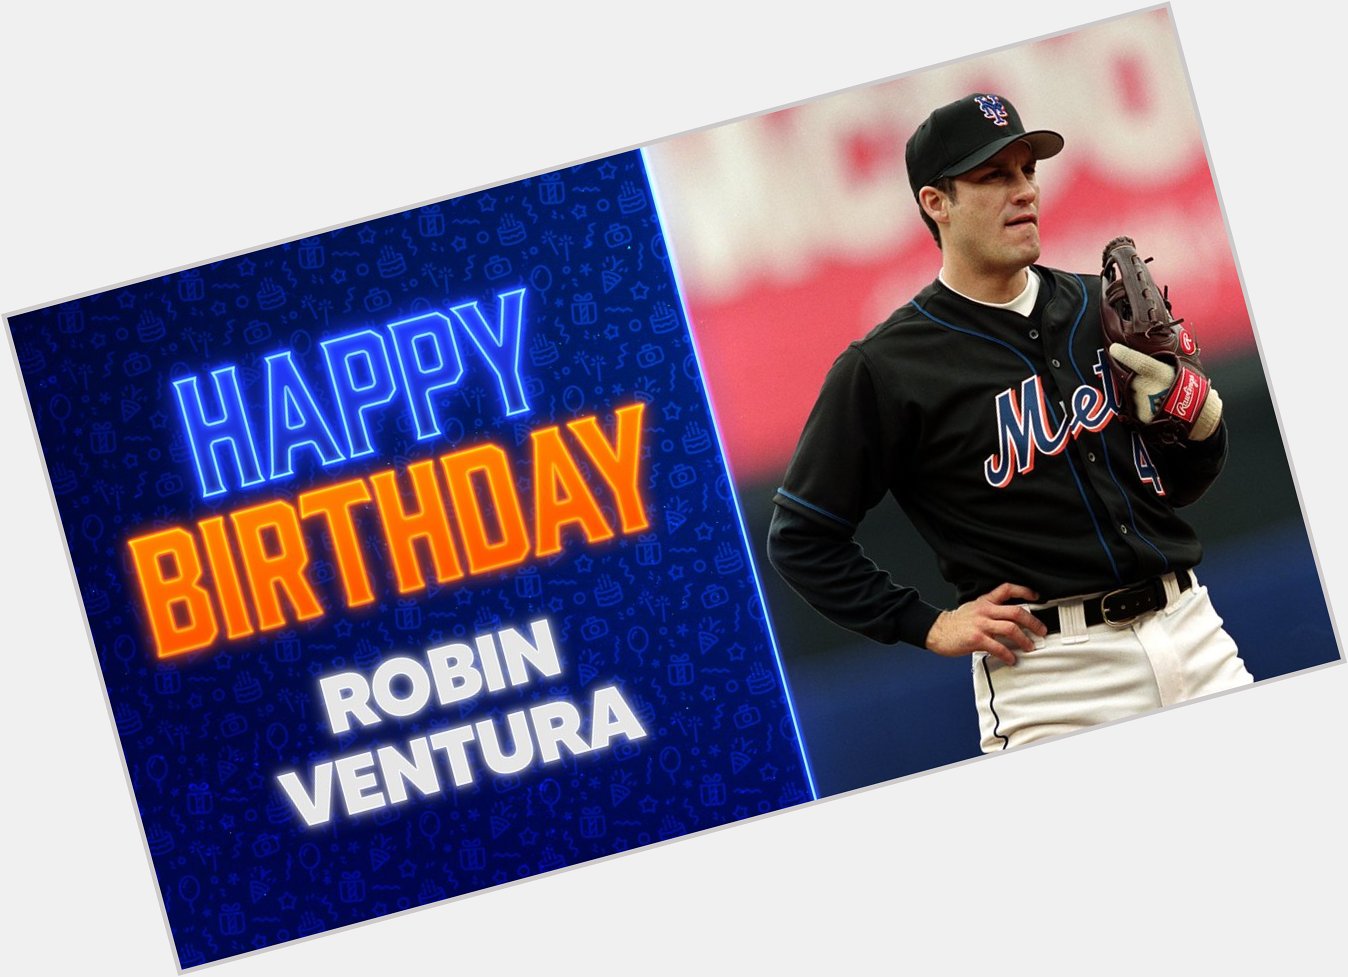 Happy birthday, Robin Ventura!  